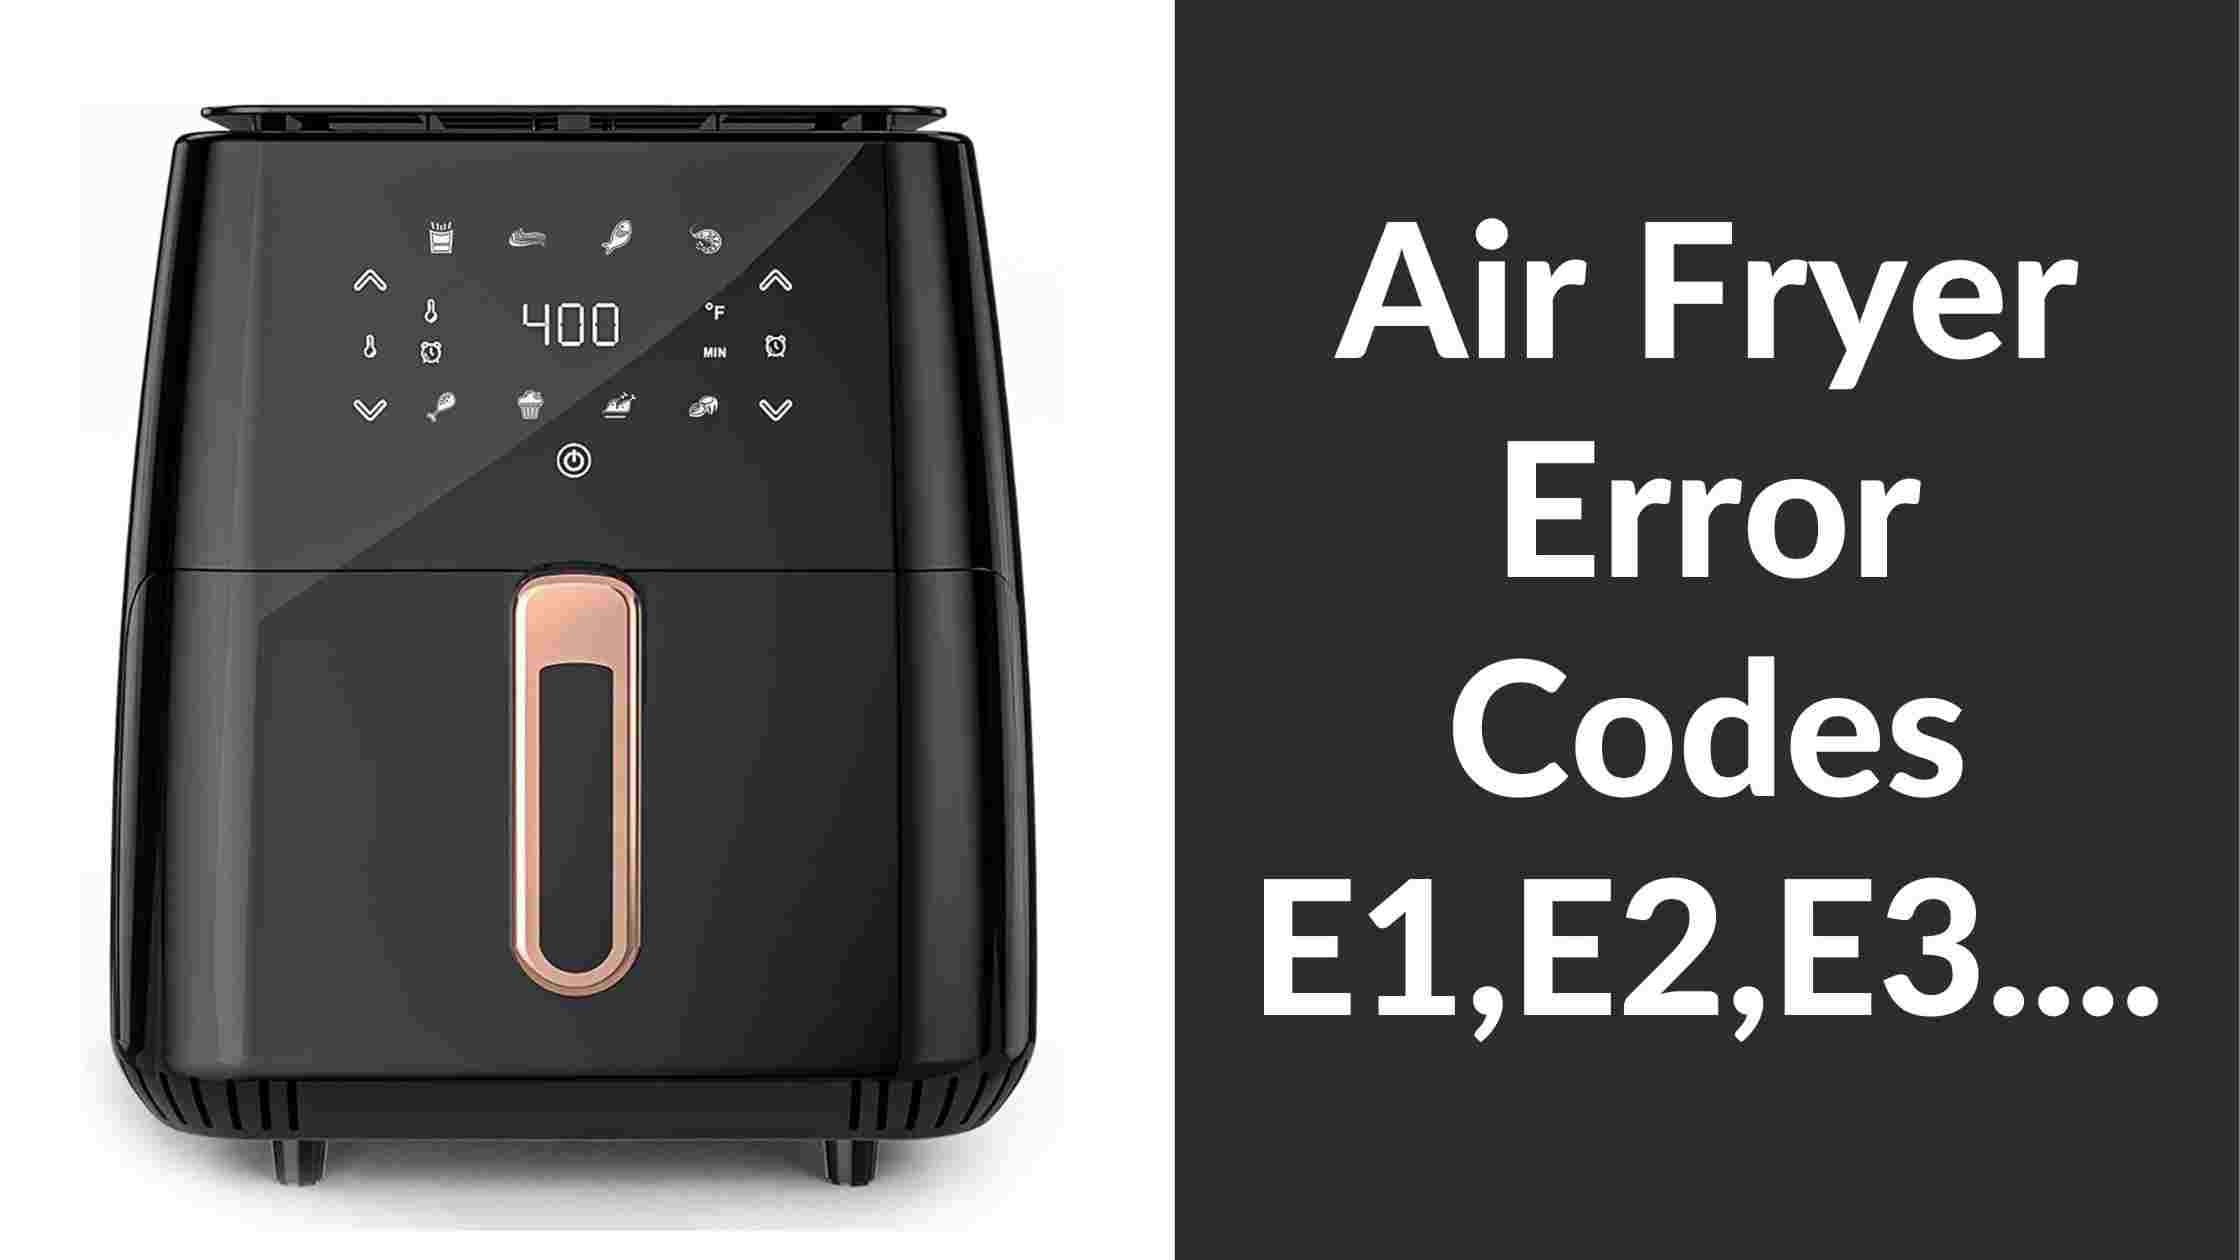 Air Fryer Error Codes E1,E2,E3